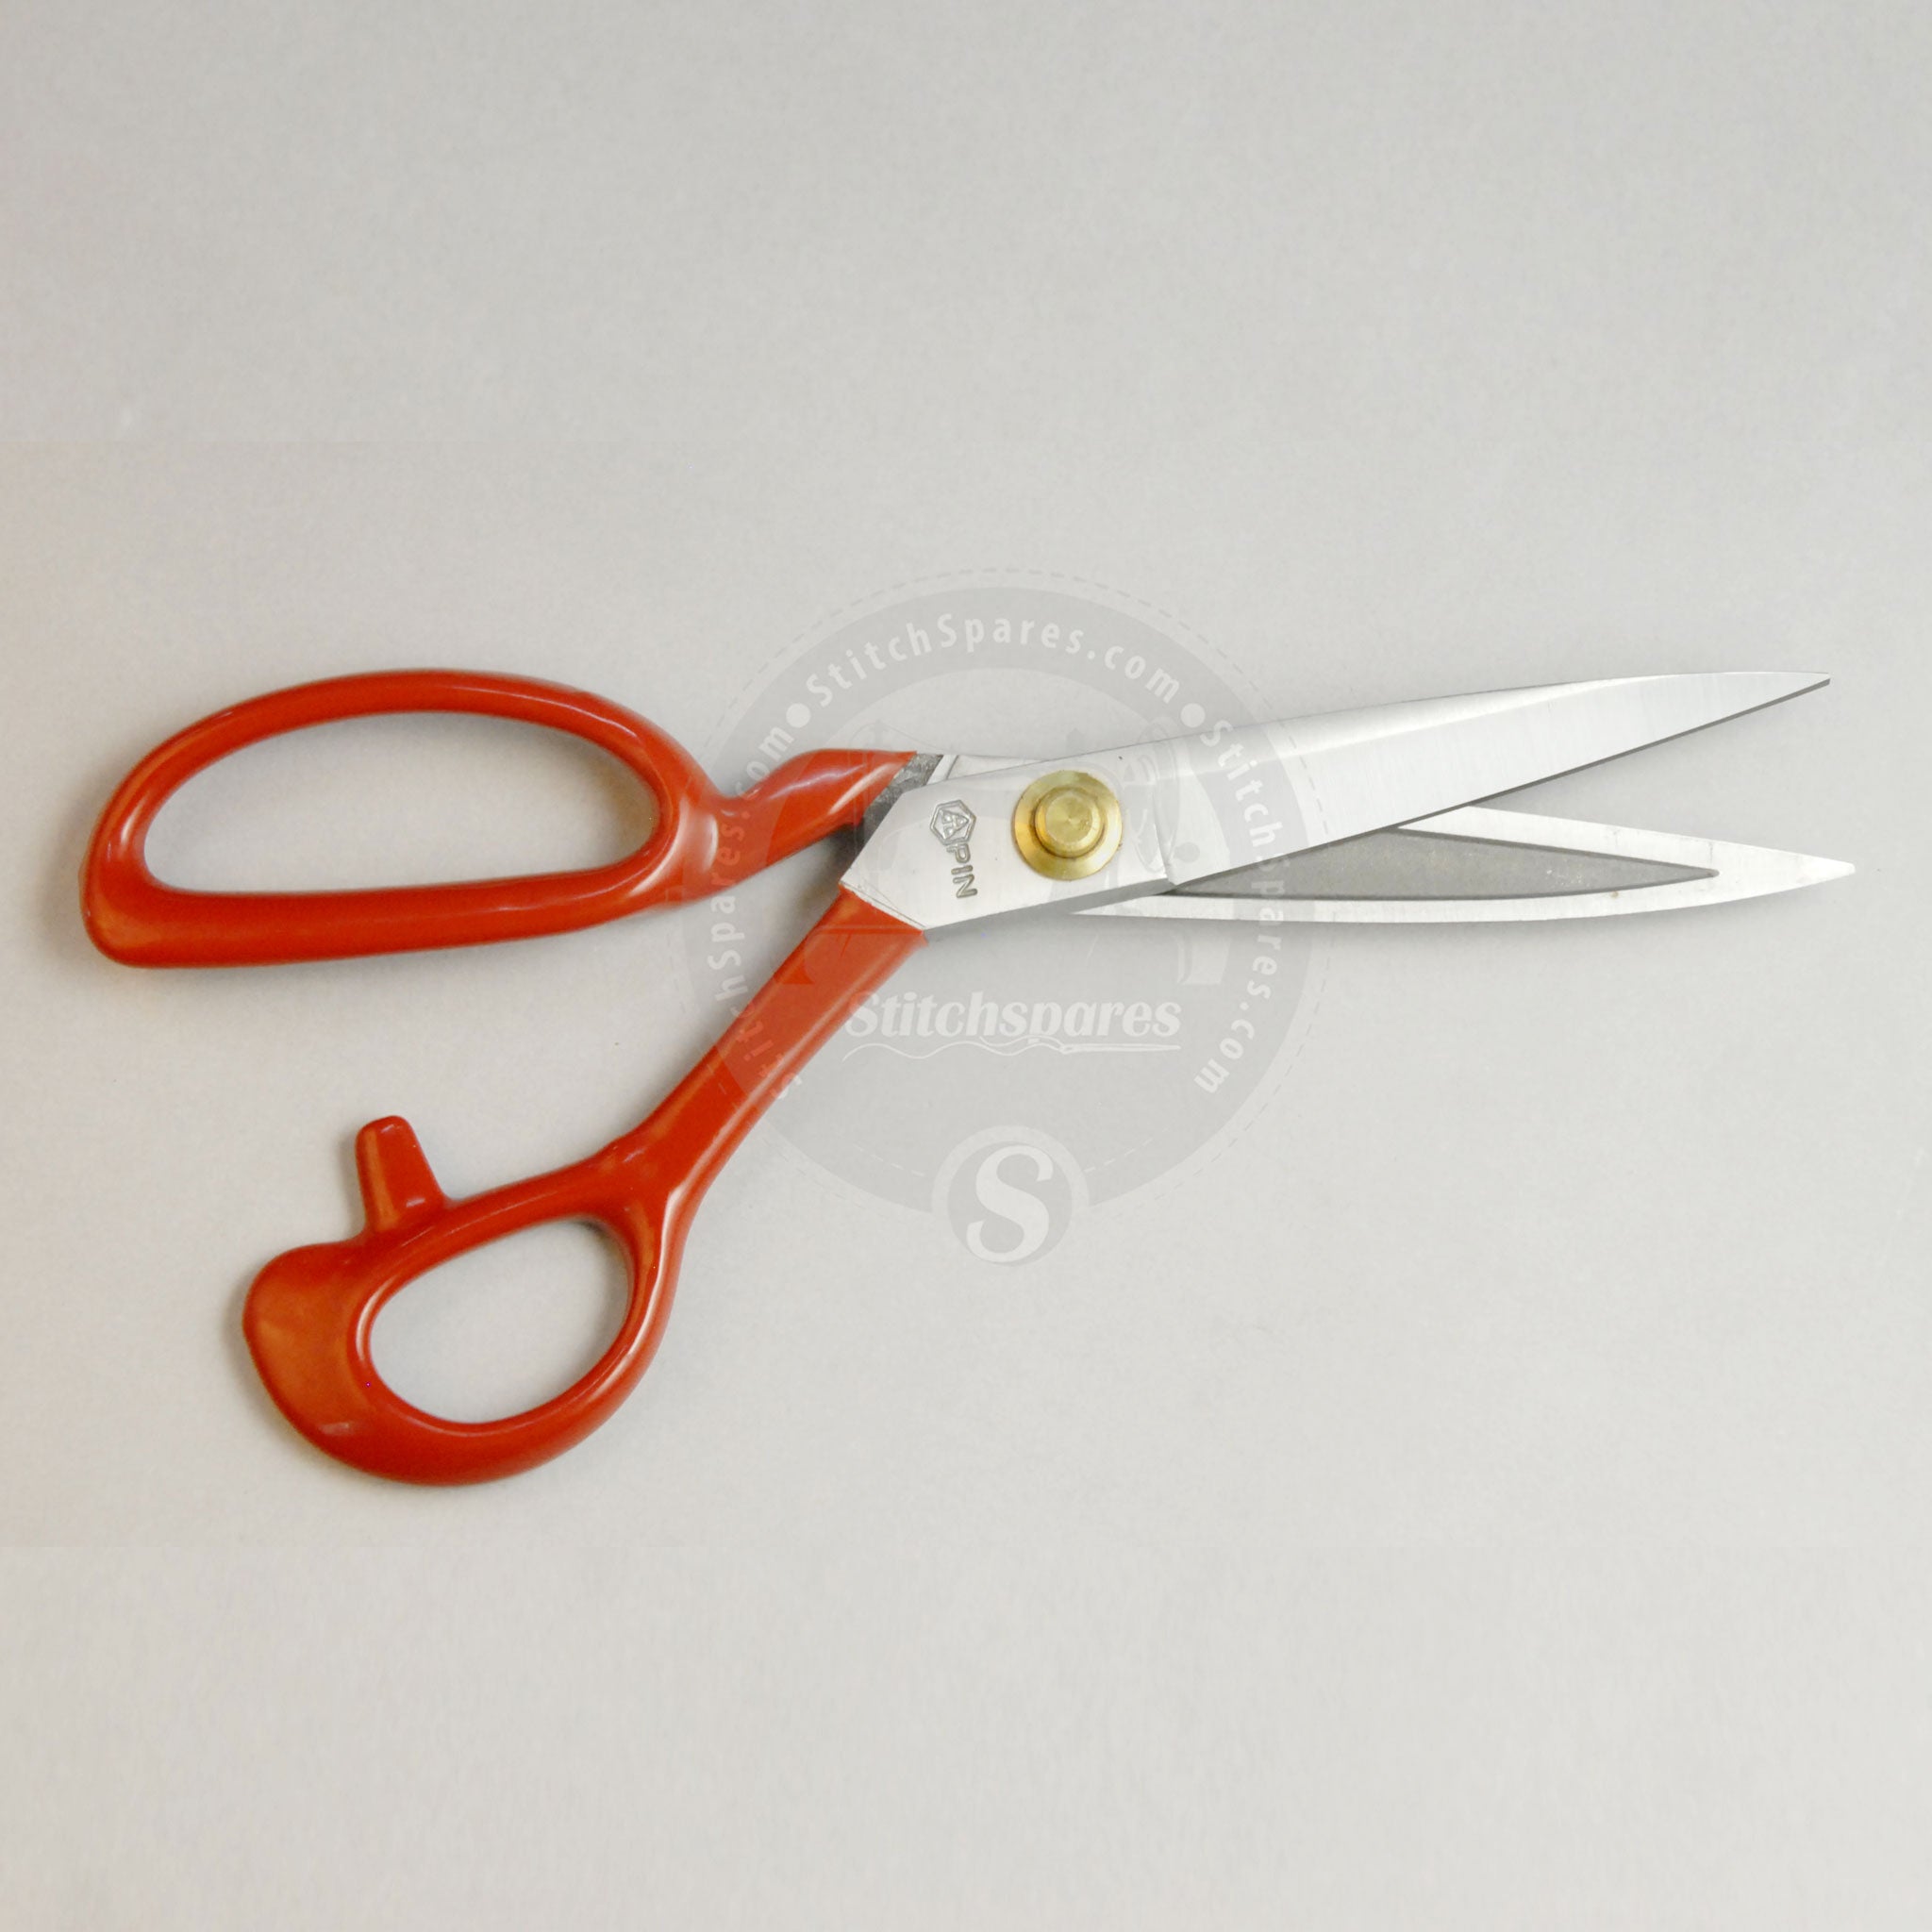 Sewing Scissors Set - GDJOB 9 inch Professional Fabric Scissors